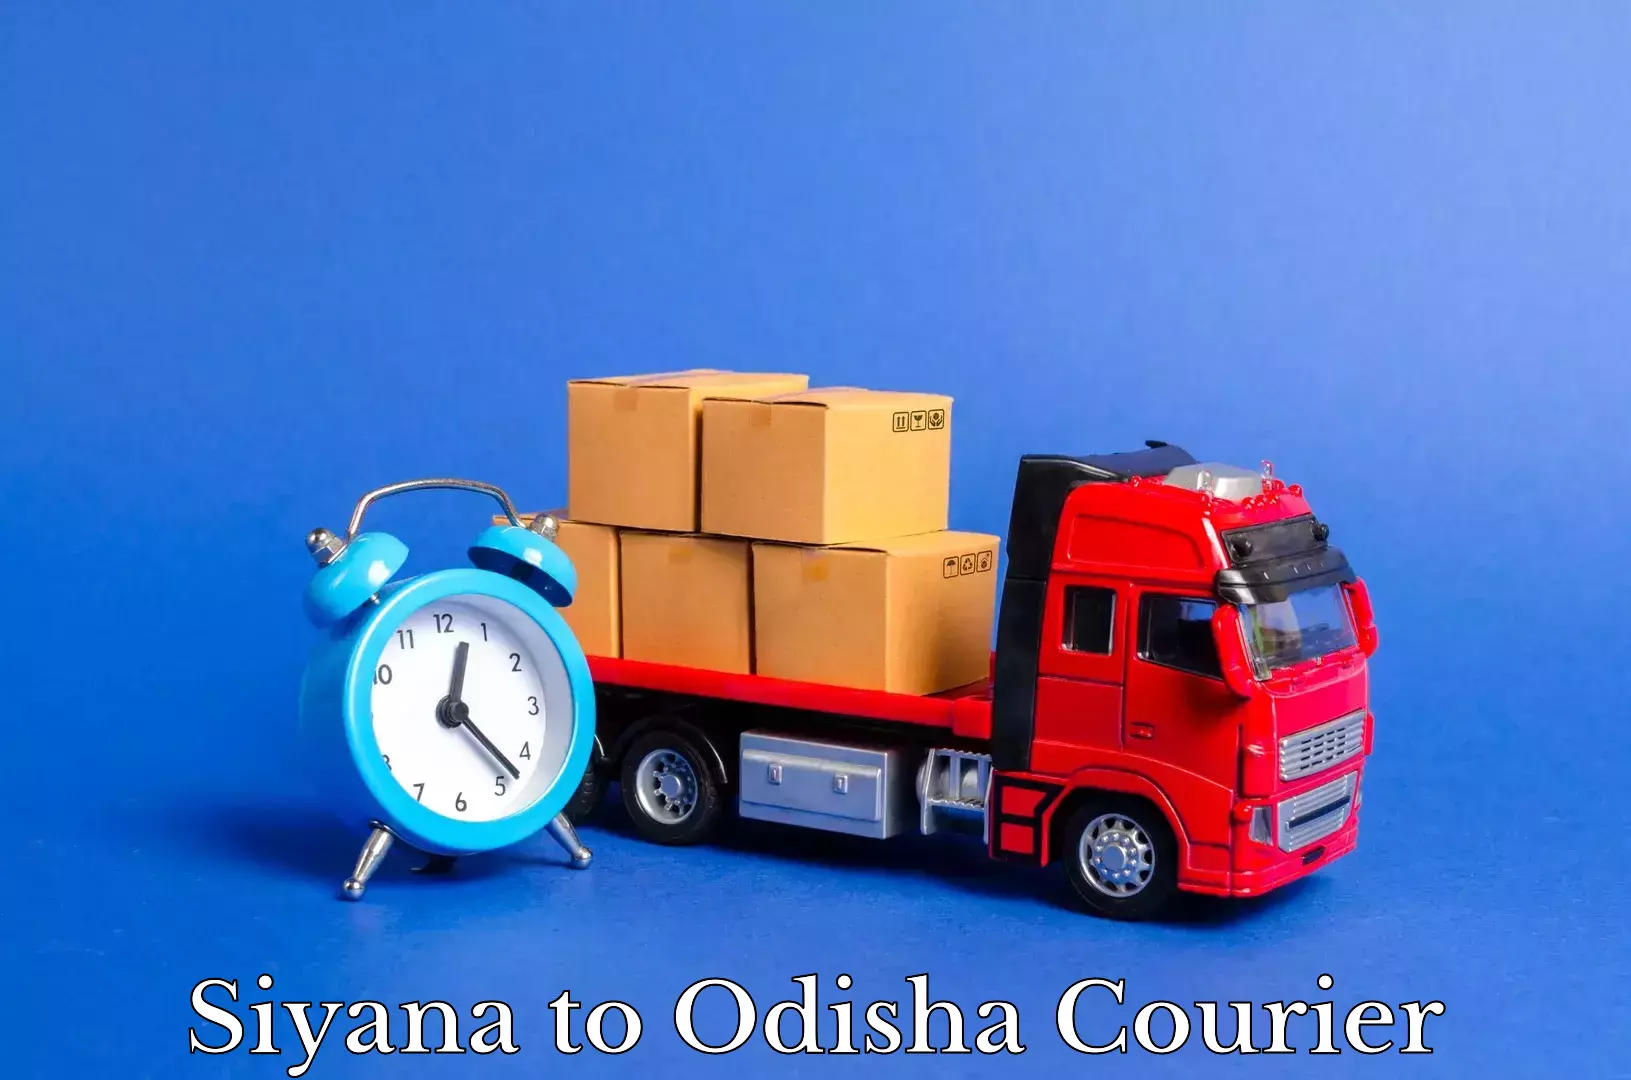 Professional moving assistance in Siyana to Bhawanipatna